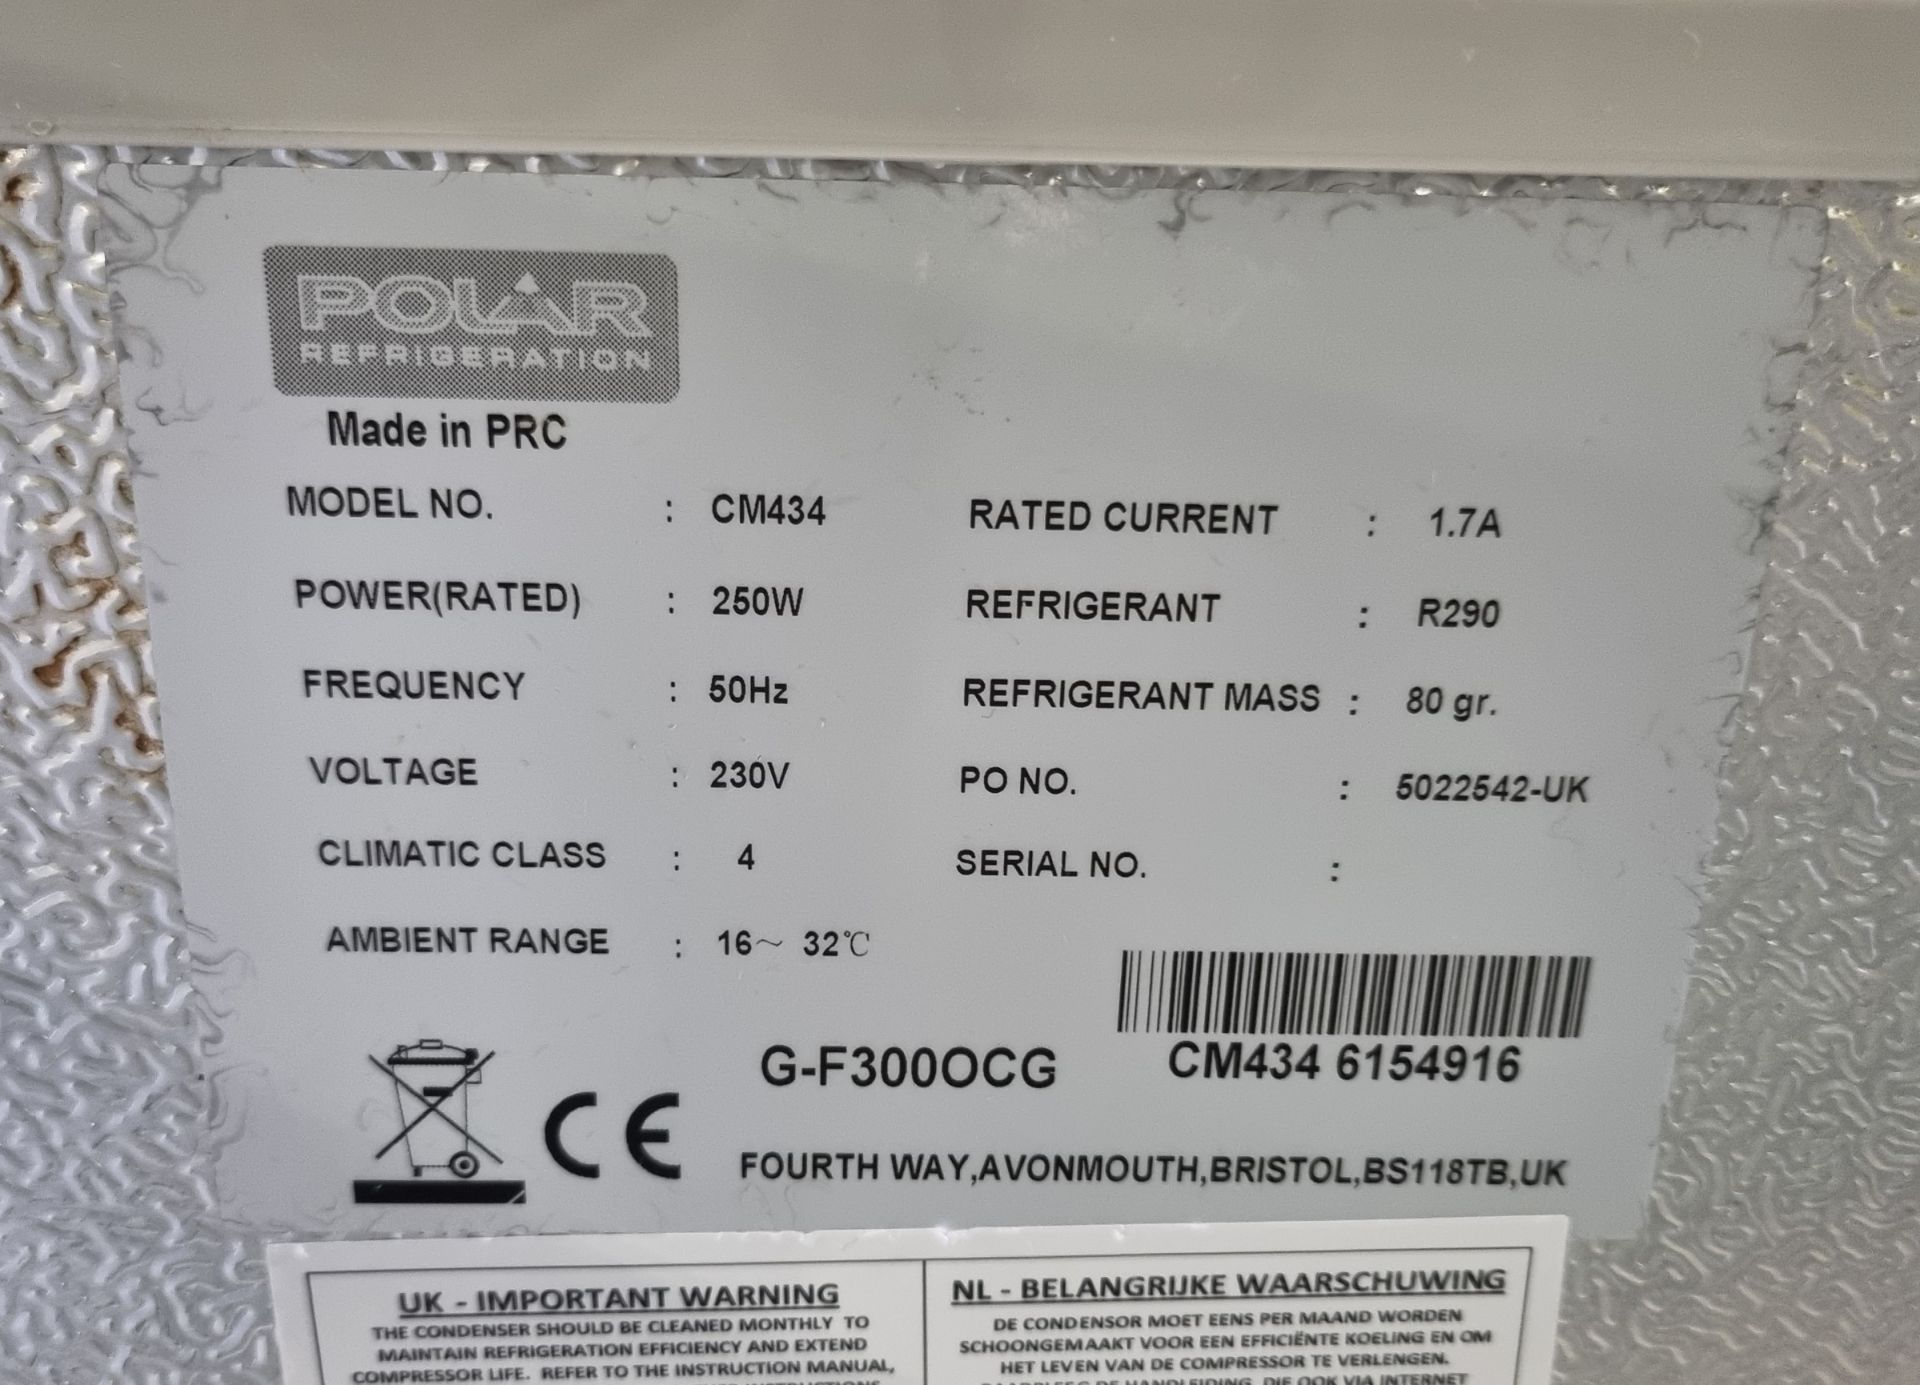 Polar CM434 display chest freezer - 2 sliding doors - 270ltr capacity - W 1195 x D 654 x H 928mm - Image 4 of 4